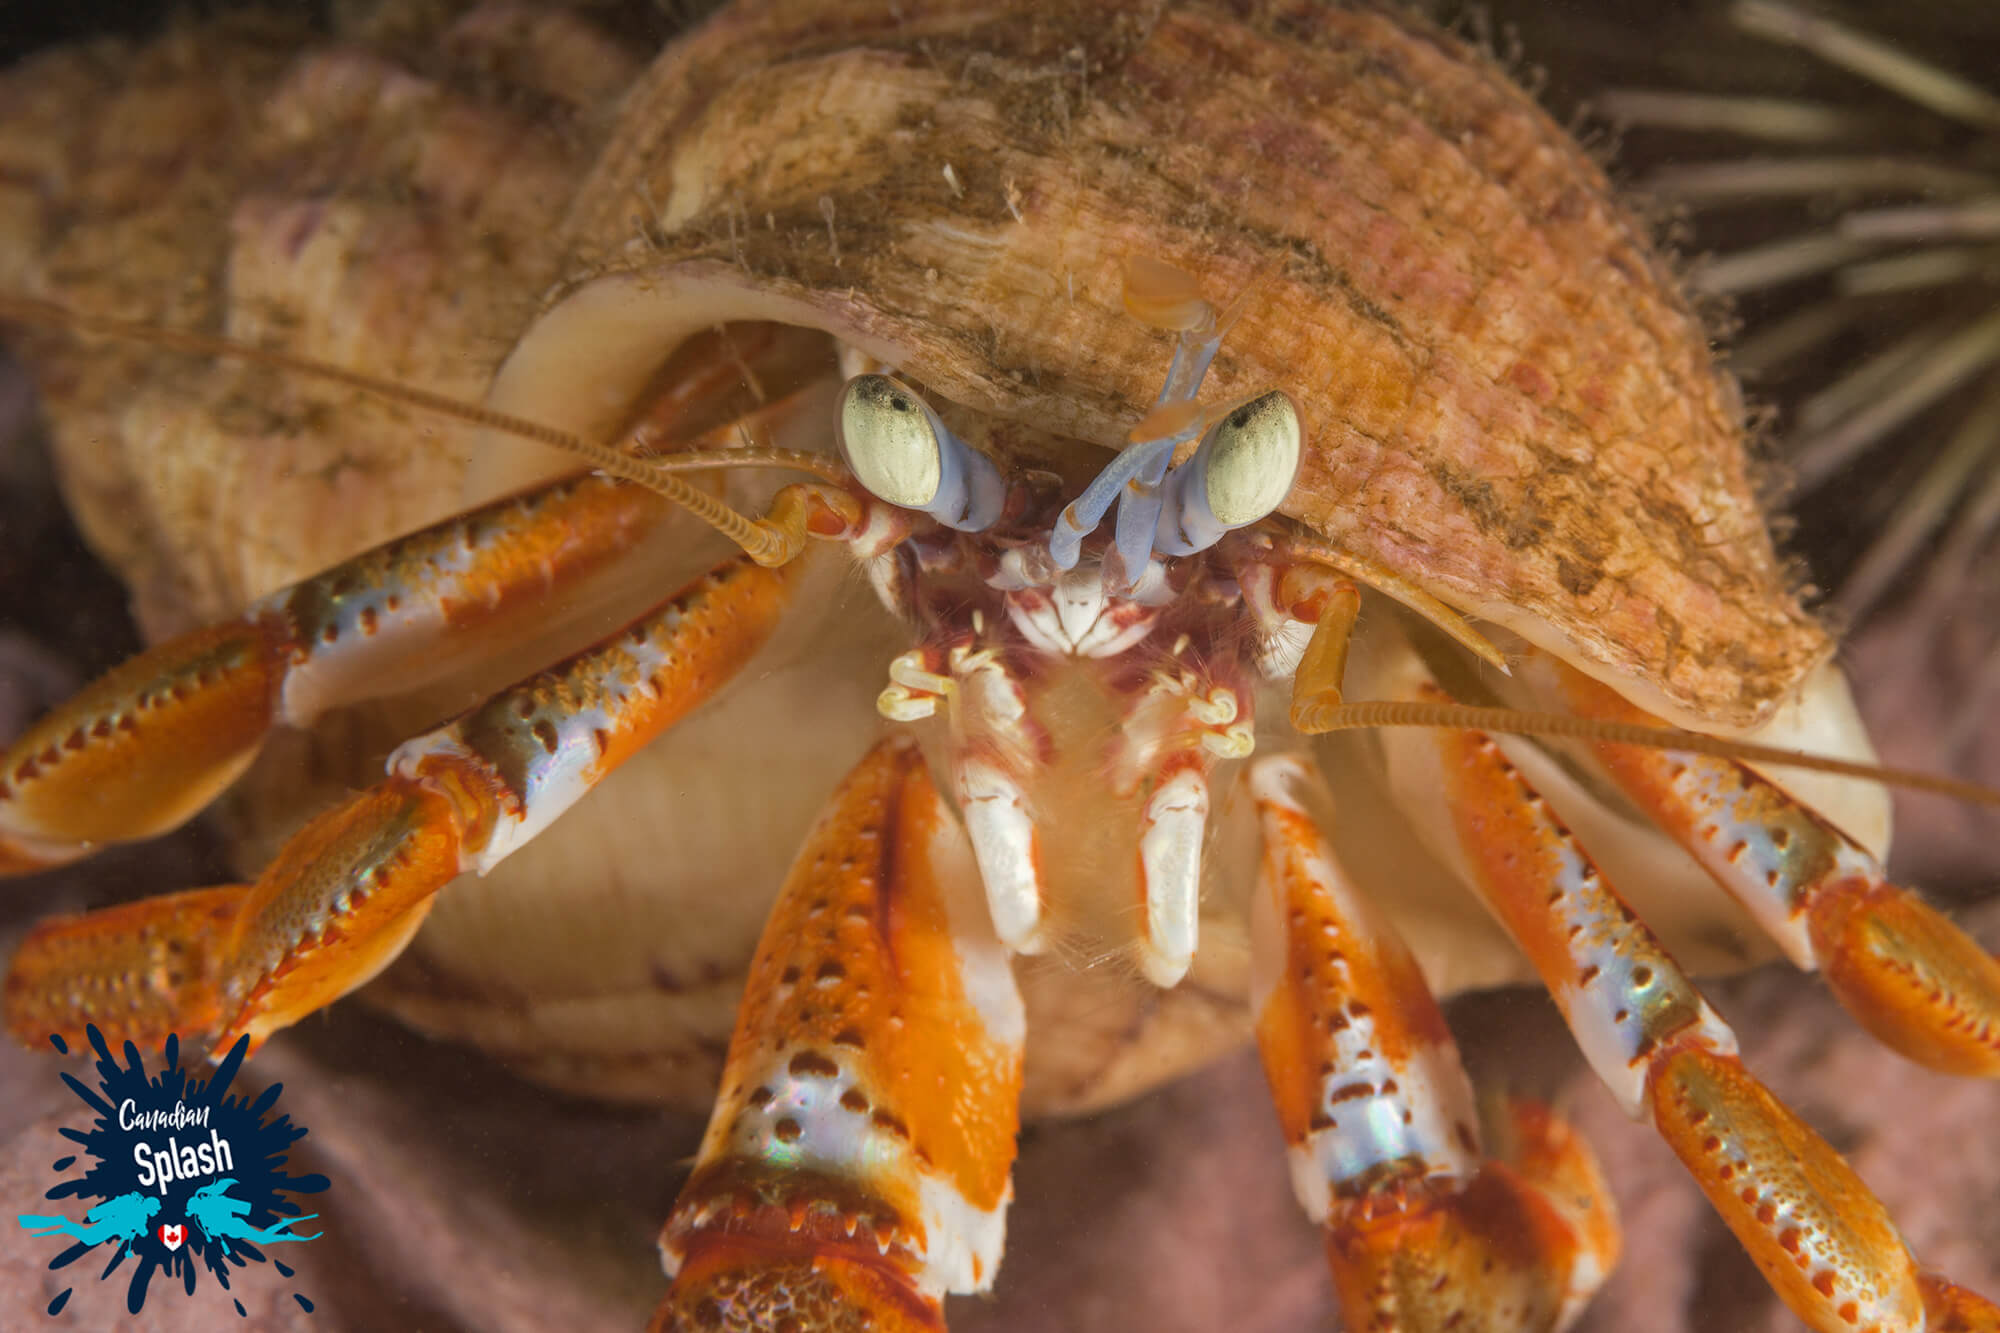 The Eyes And Legs Of An Orange Hermit Crab On Deer Island, New Brunswick, Canadian Splash Underwater Photography